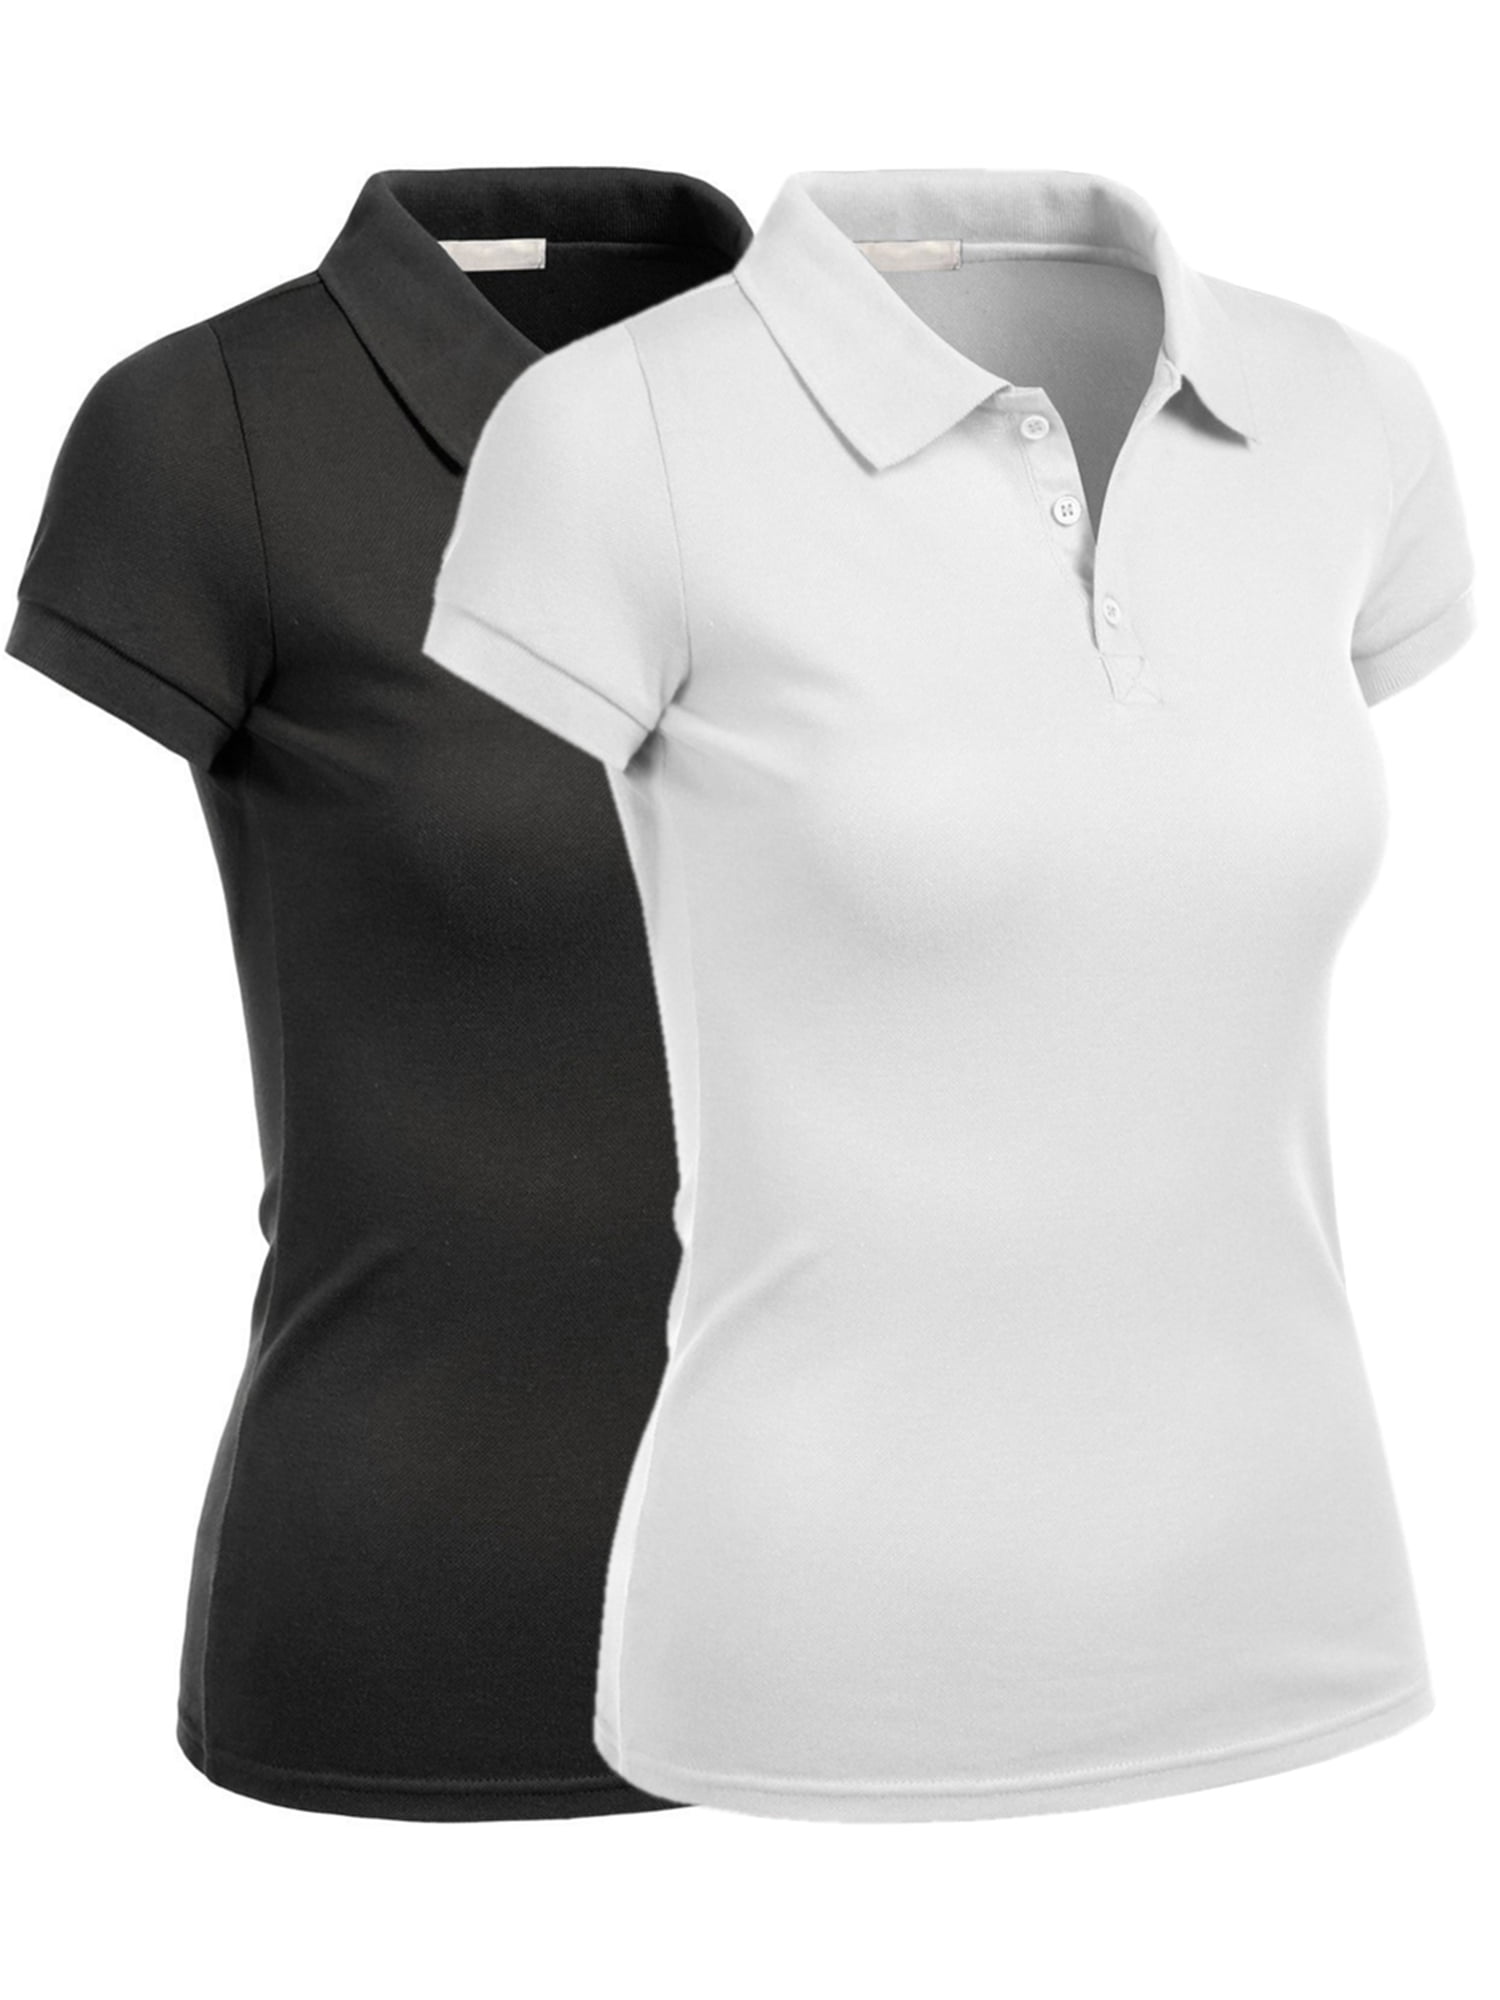 S-3XL NE PEOPLE Womens Basic Daily Work Short Sleeve Pique Stretchy Polo Shirt School Uniform 